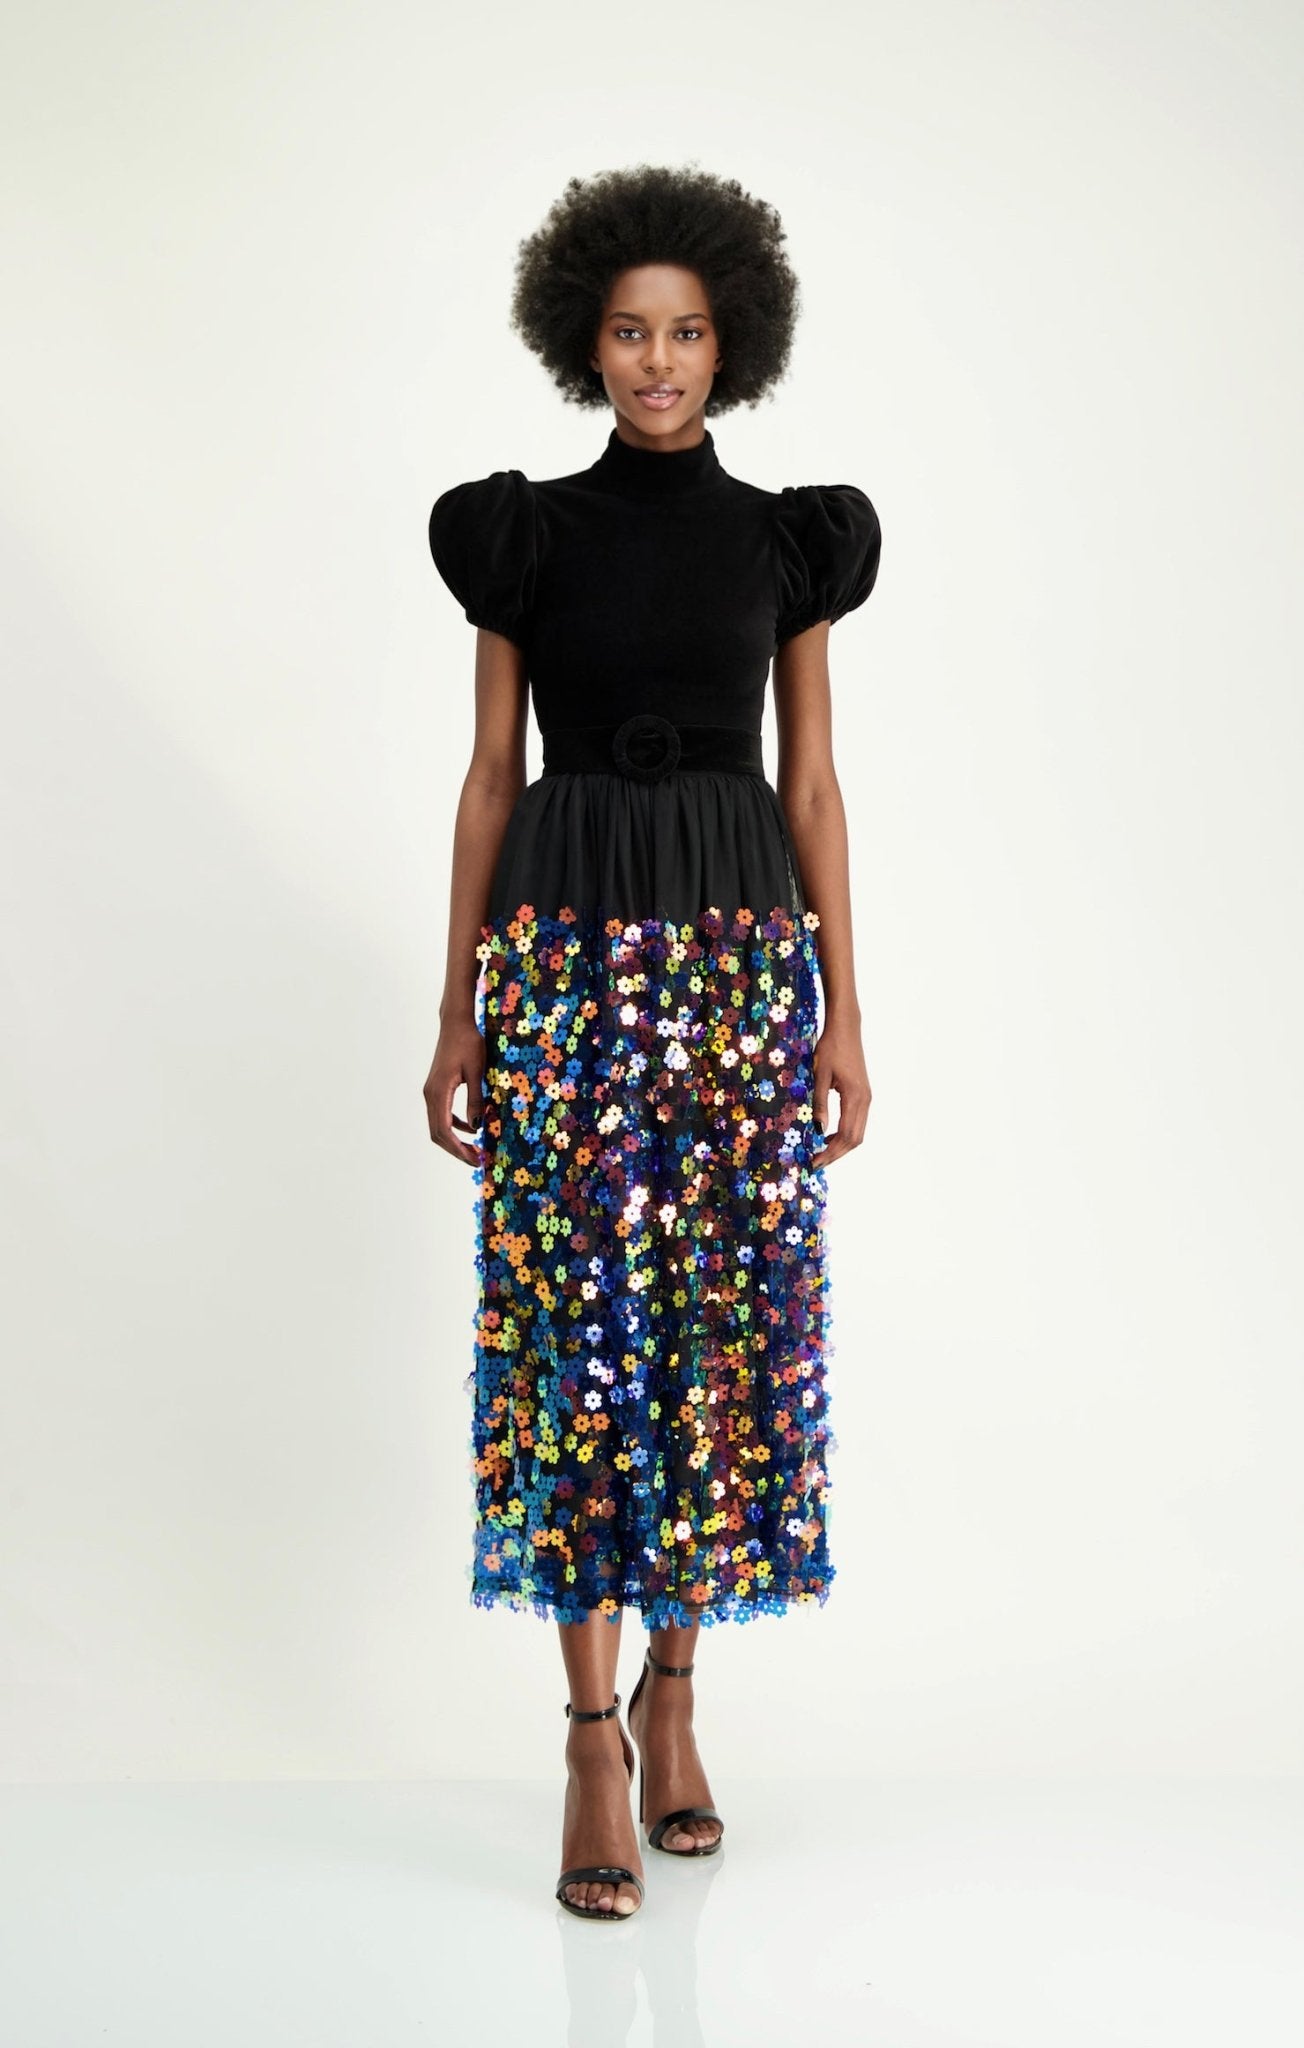 SKIAR - Sequin Skirt multicolor - Thang de Hoo